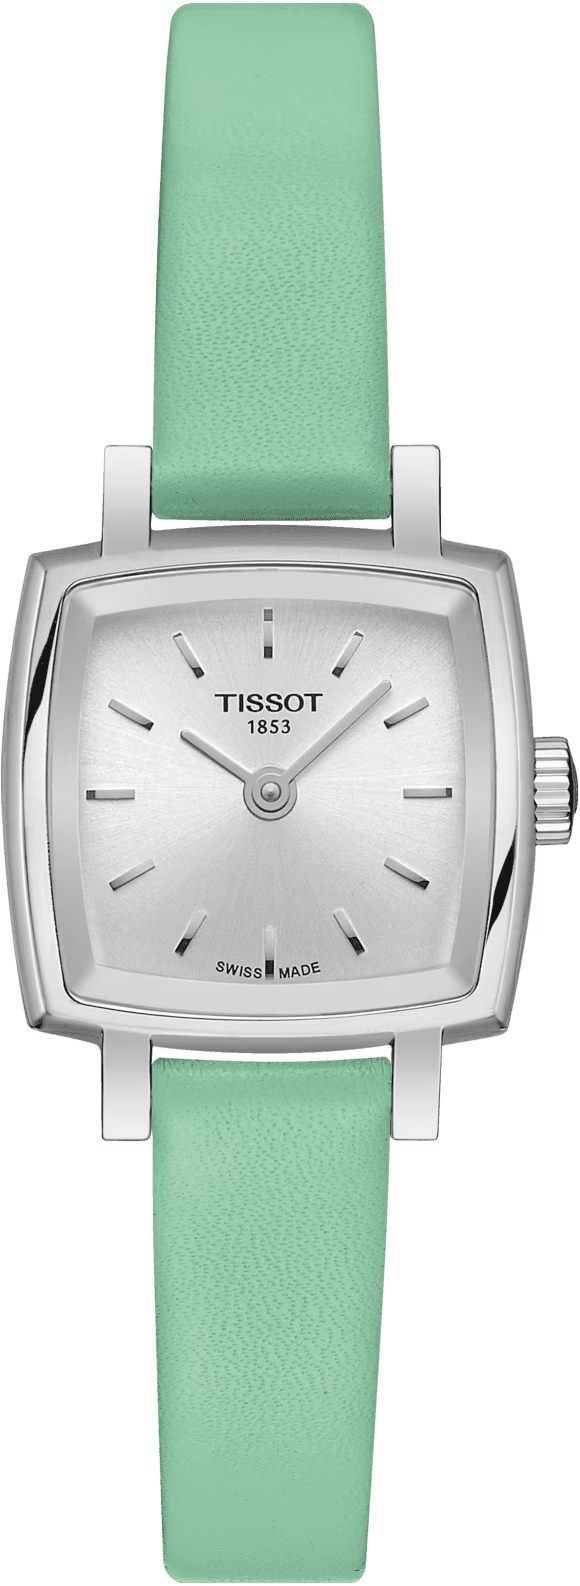 Tissot T-Lady Tissot Lovely Silver Dial 20 mm Quartz Watch For Women - 1